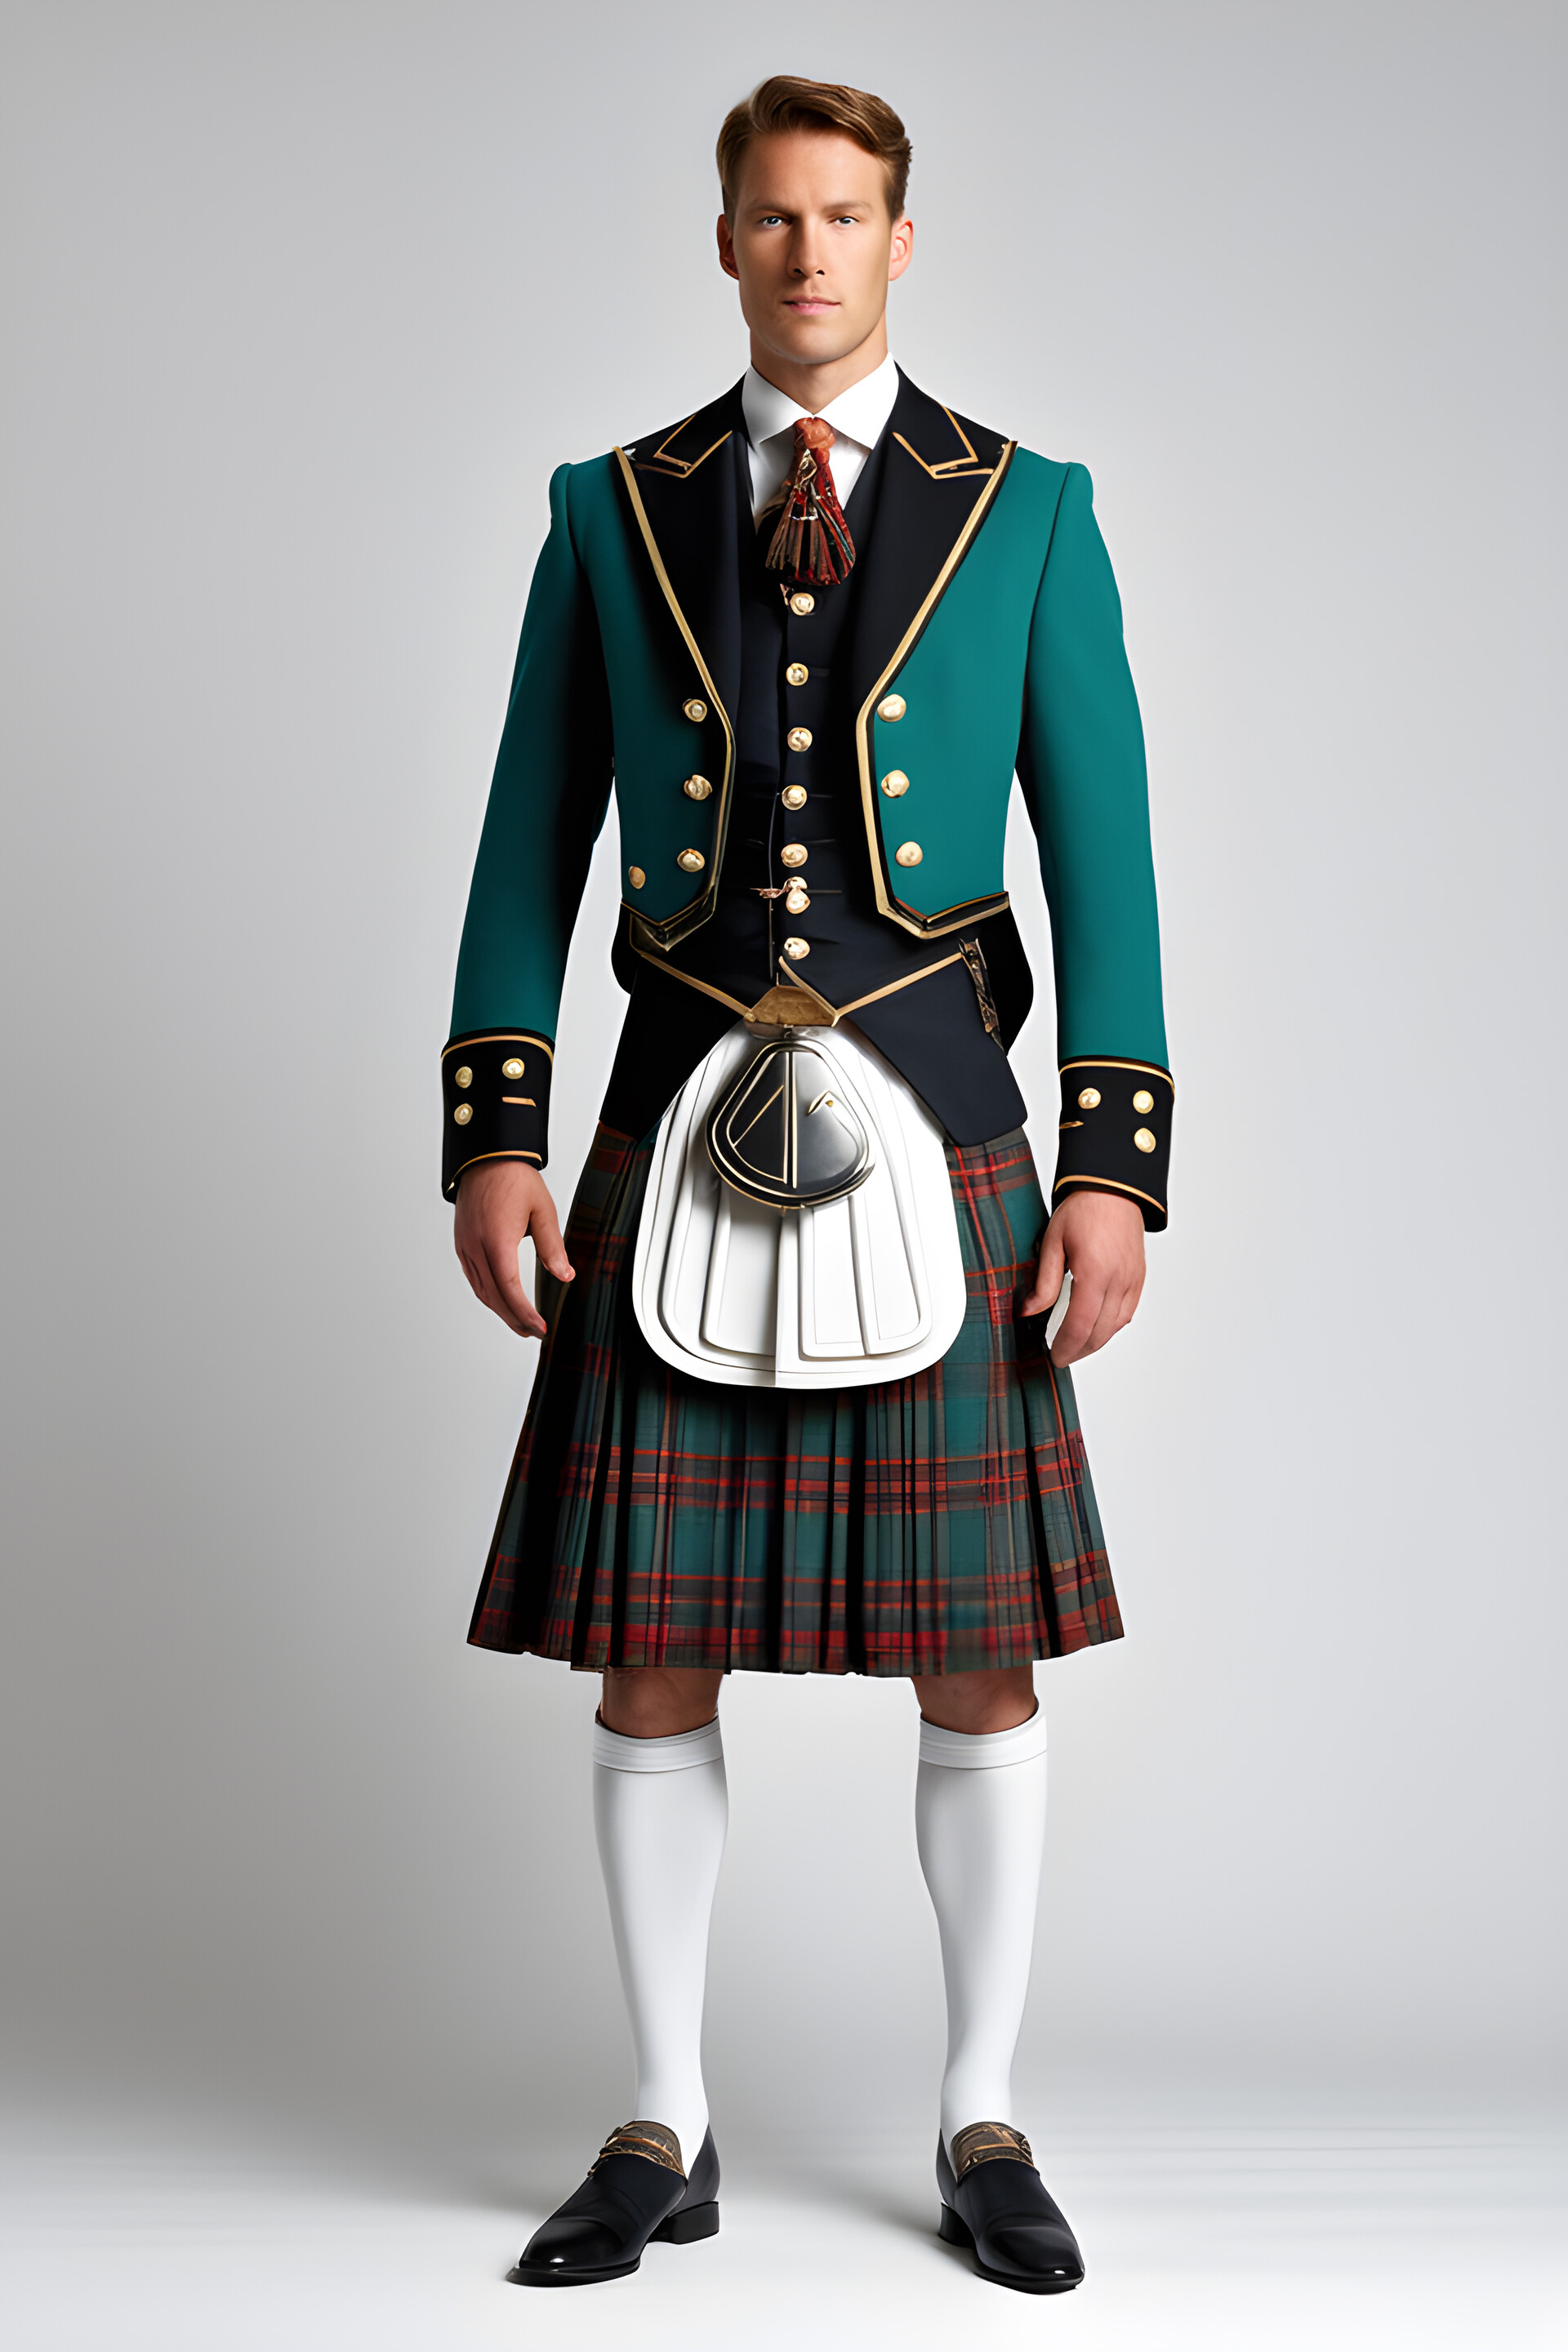 ArtStation - 200 Traditional Scottish Men's Costumes - Fashion Design ...